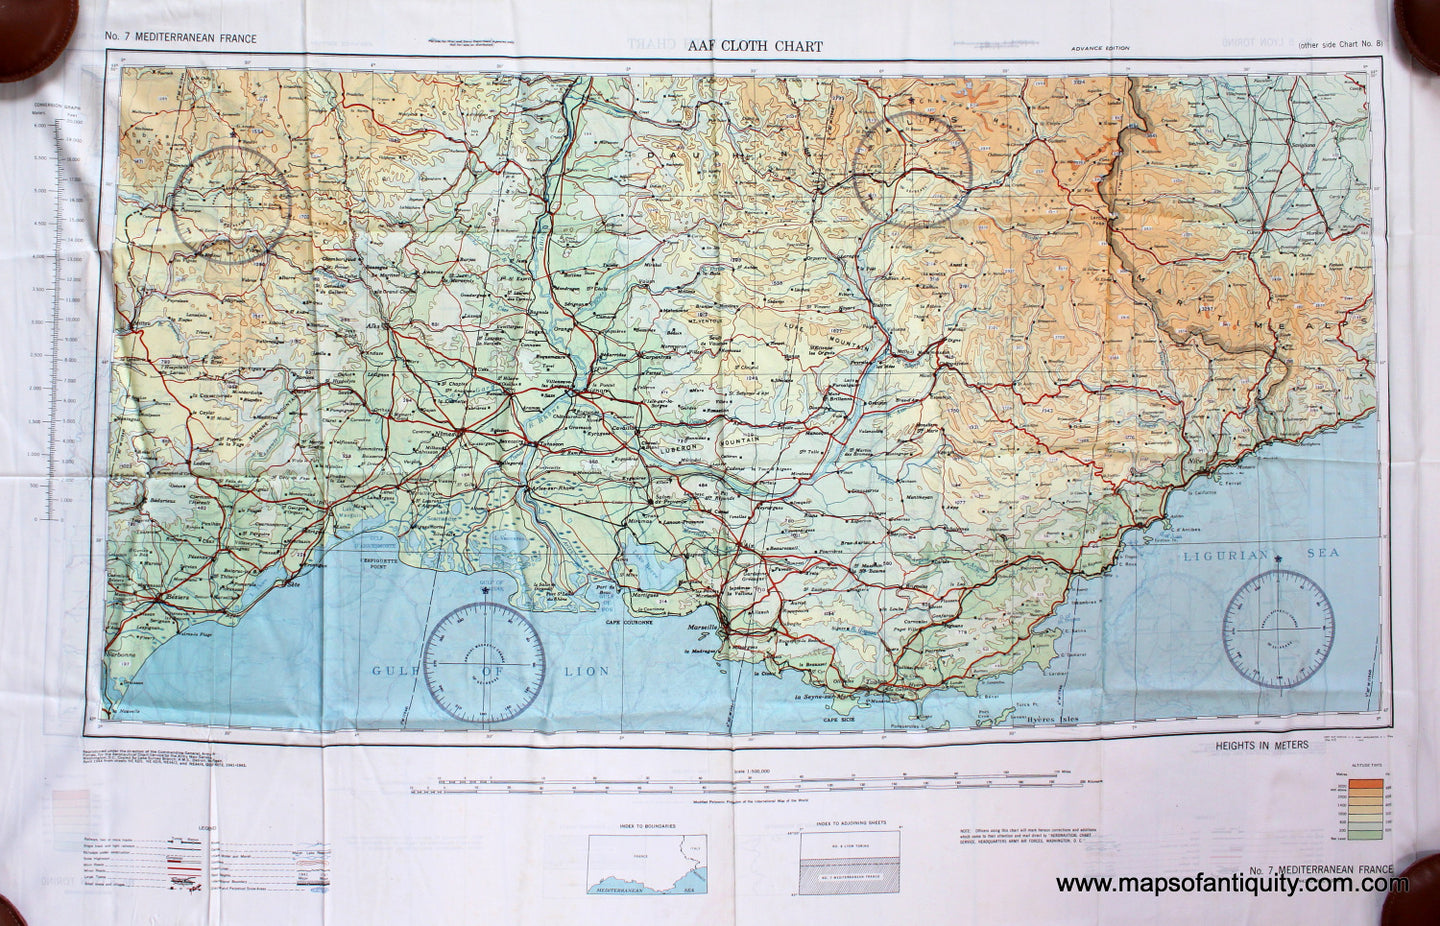 Printed-Silk-Scarf-AAF-Cloth-No.-8-Chart-Lyon-Torino-No.-7-Mediterranean-France-**********-Europe-Europe-General-1944-U.S.-War-Department-Maps-Of-Antiquity